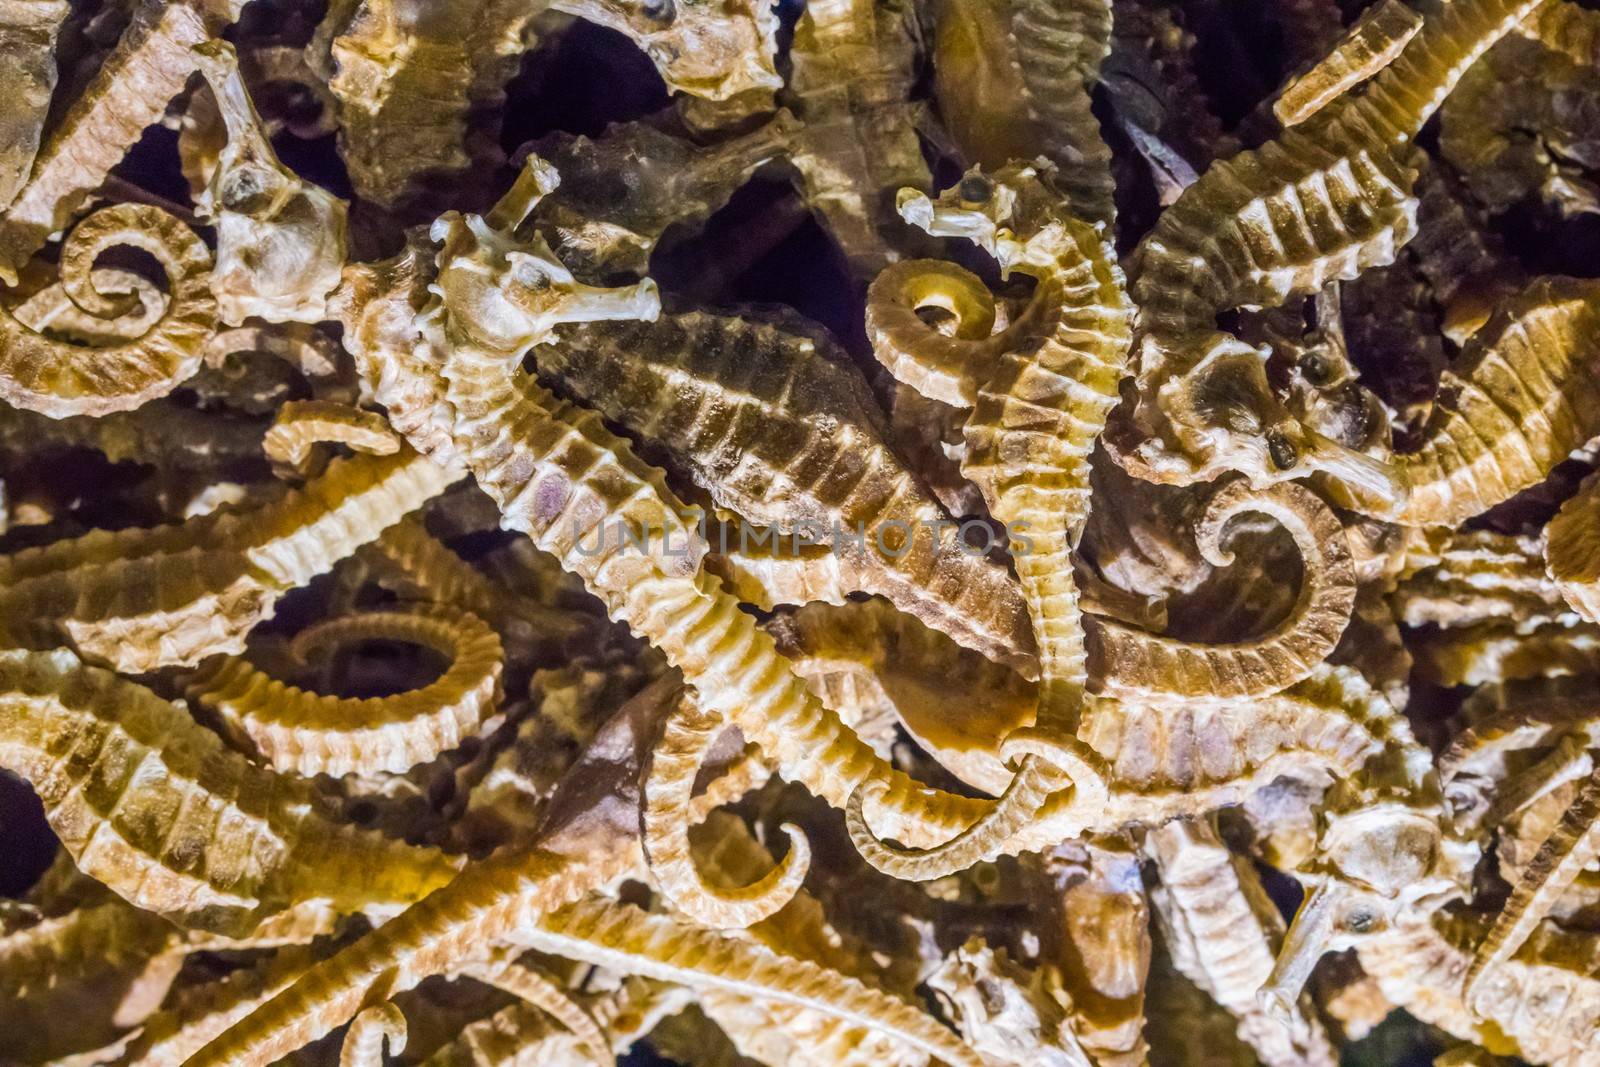 macro closeup of dried seahorses souvenirs or chines alternative medicine illegal merchandise by charlottebleijenberg